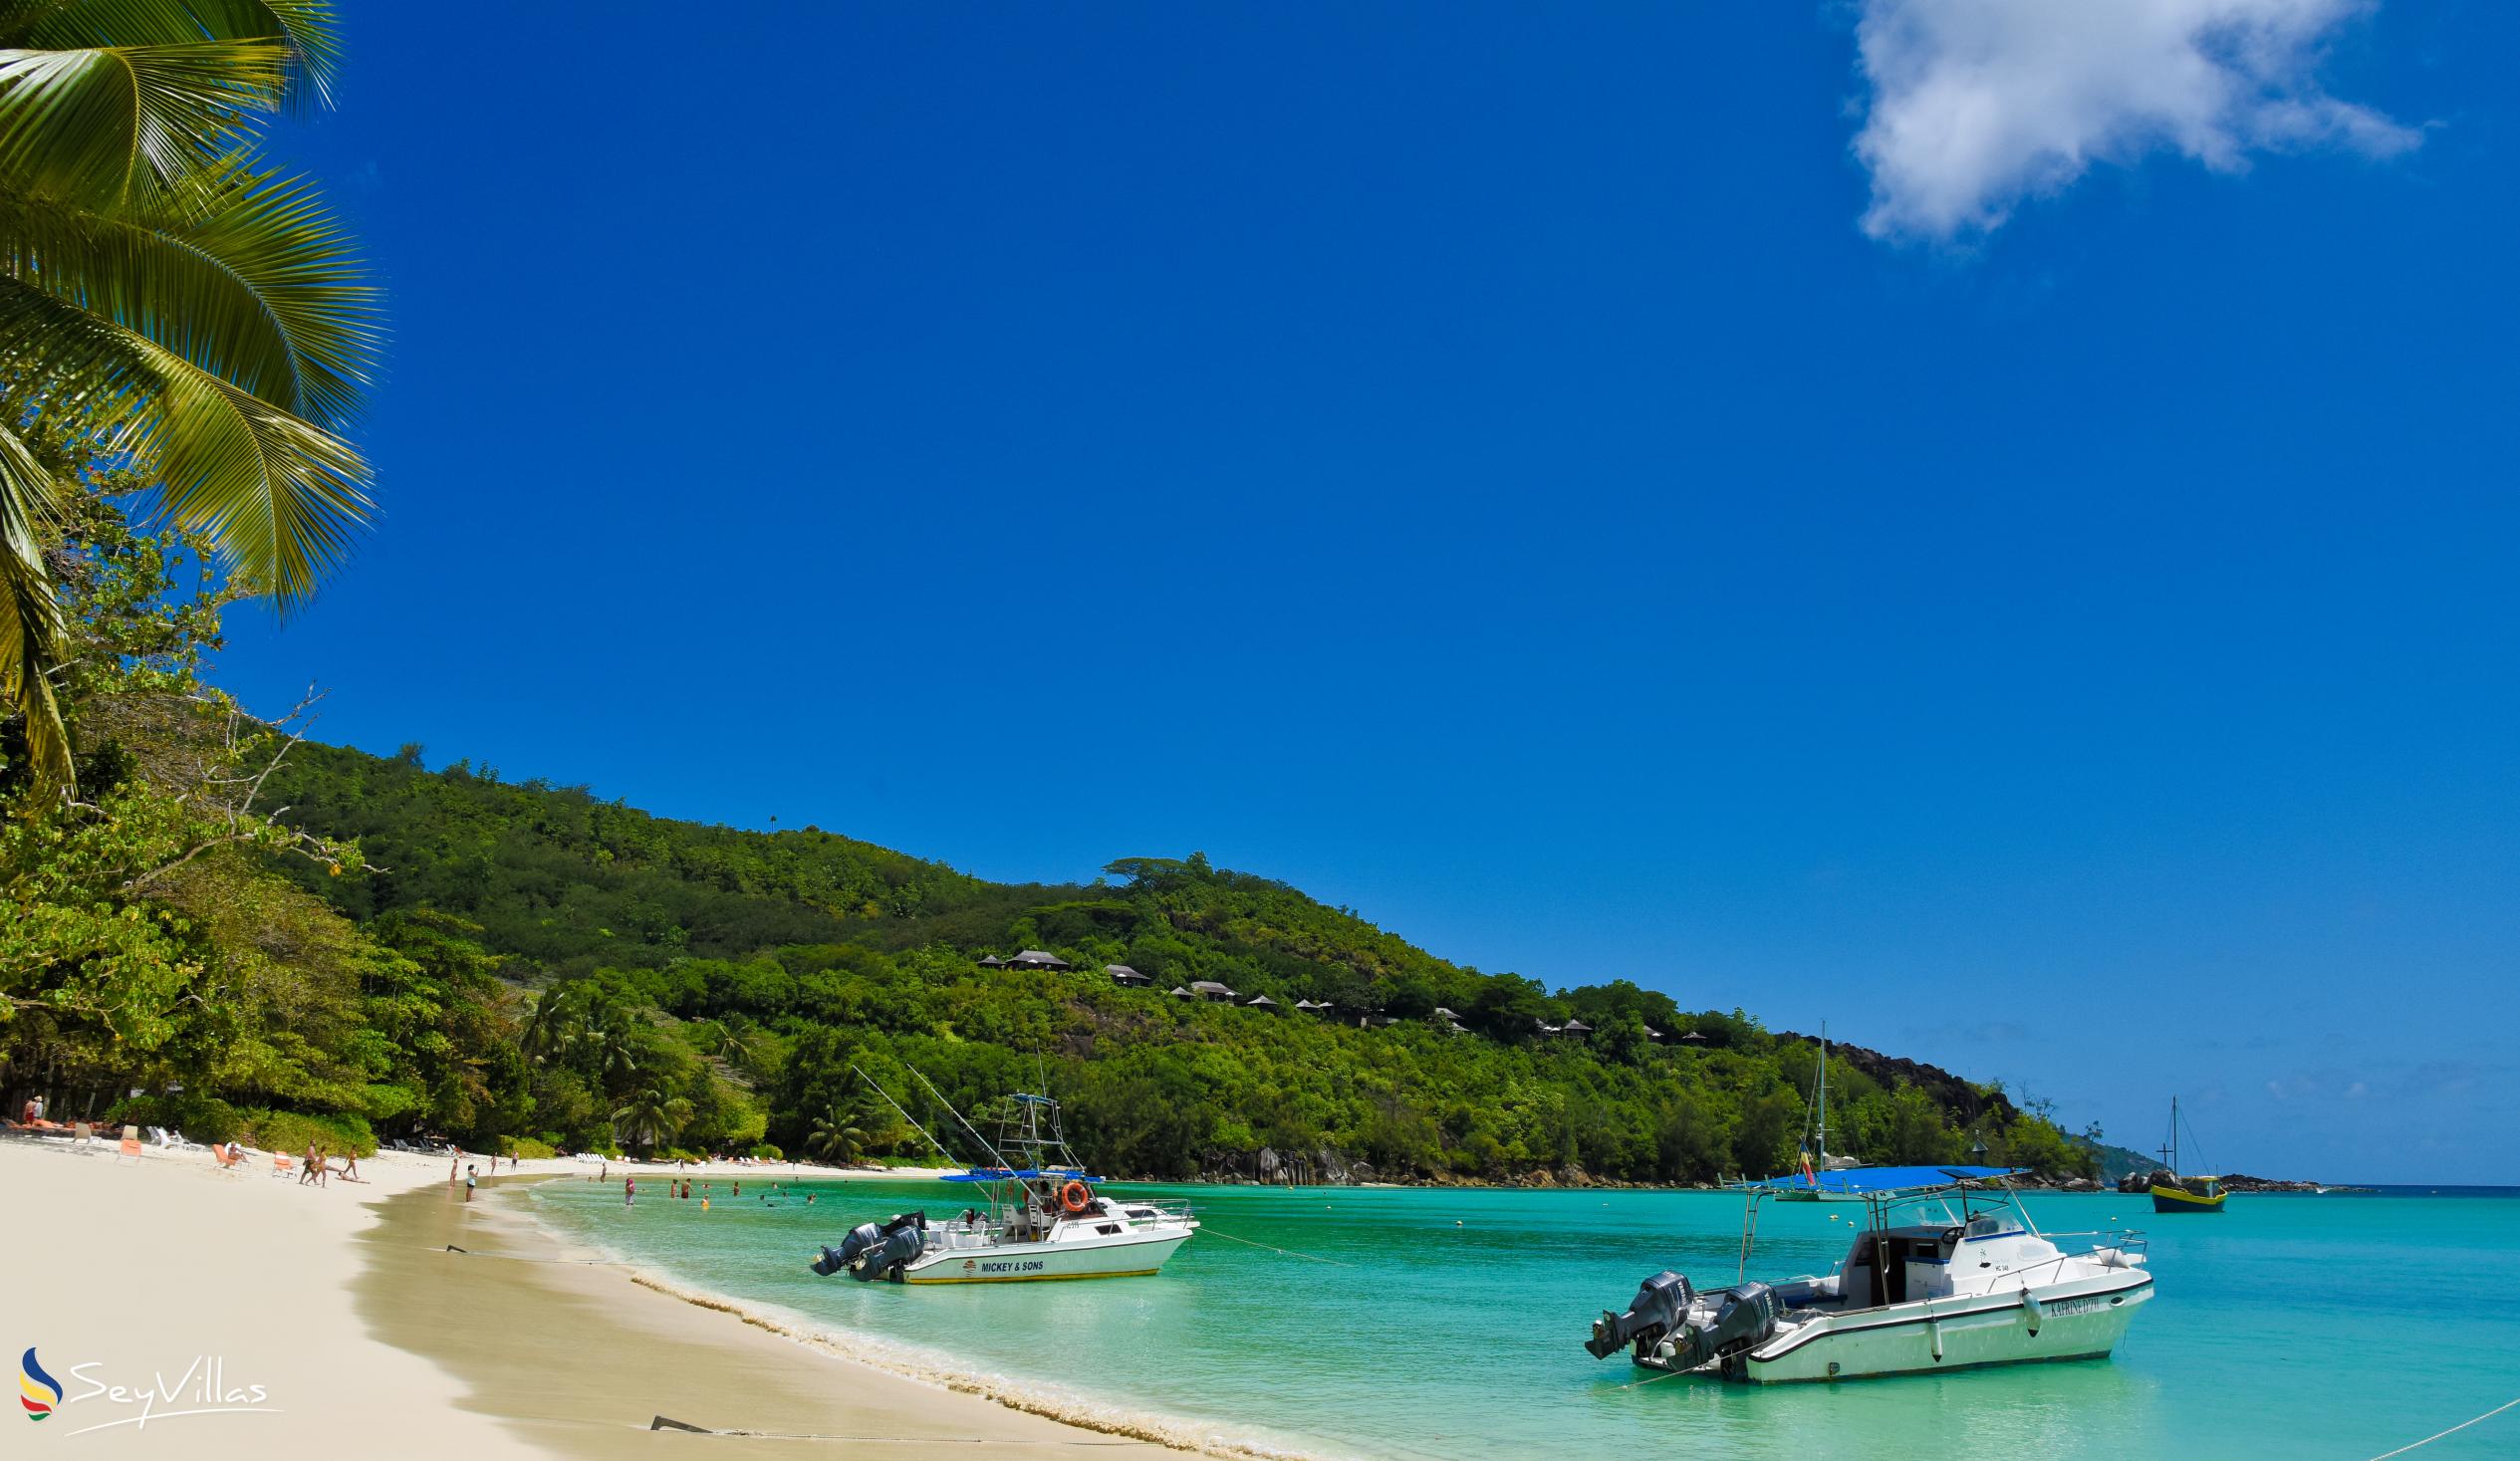 Photo 6: Port Launay North Beach - Mahé (Seychelles)